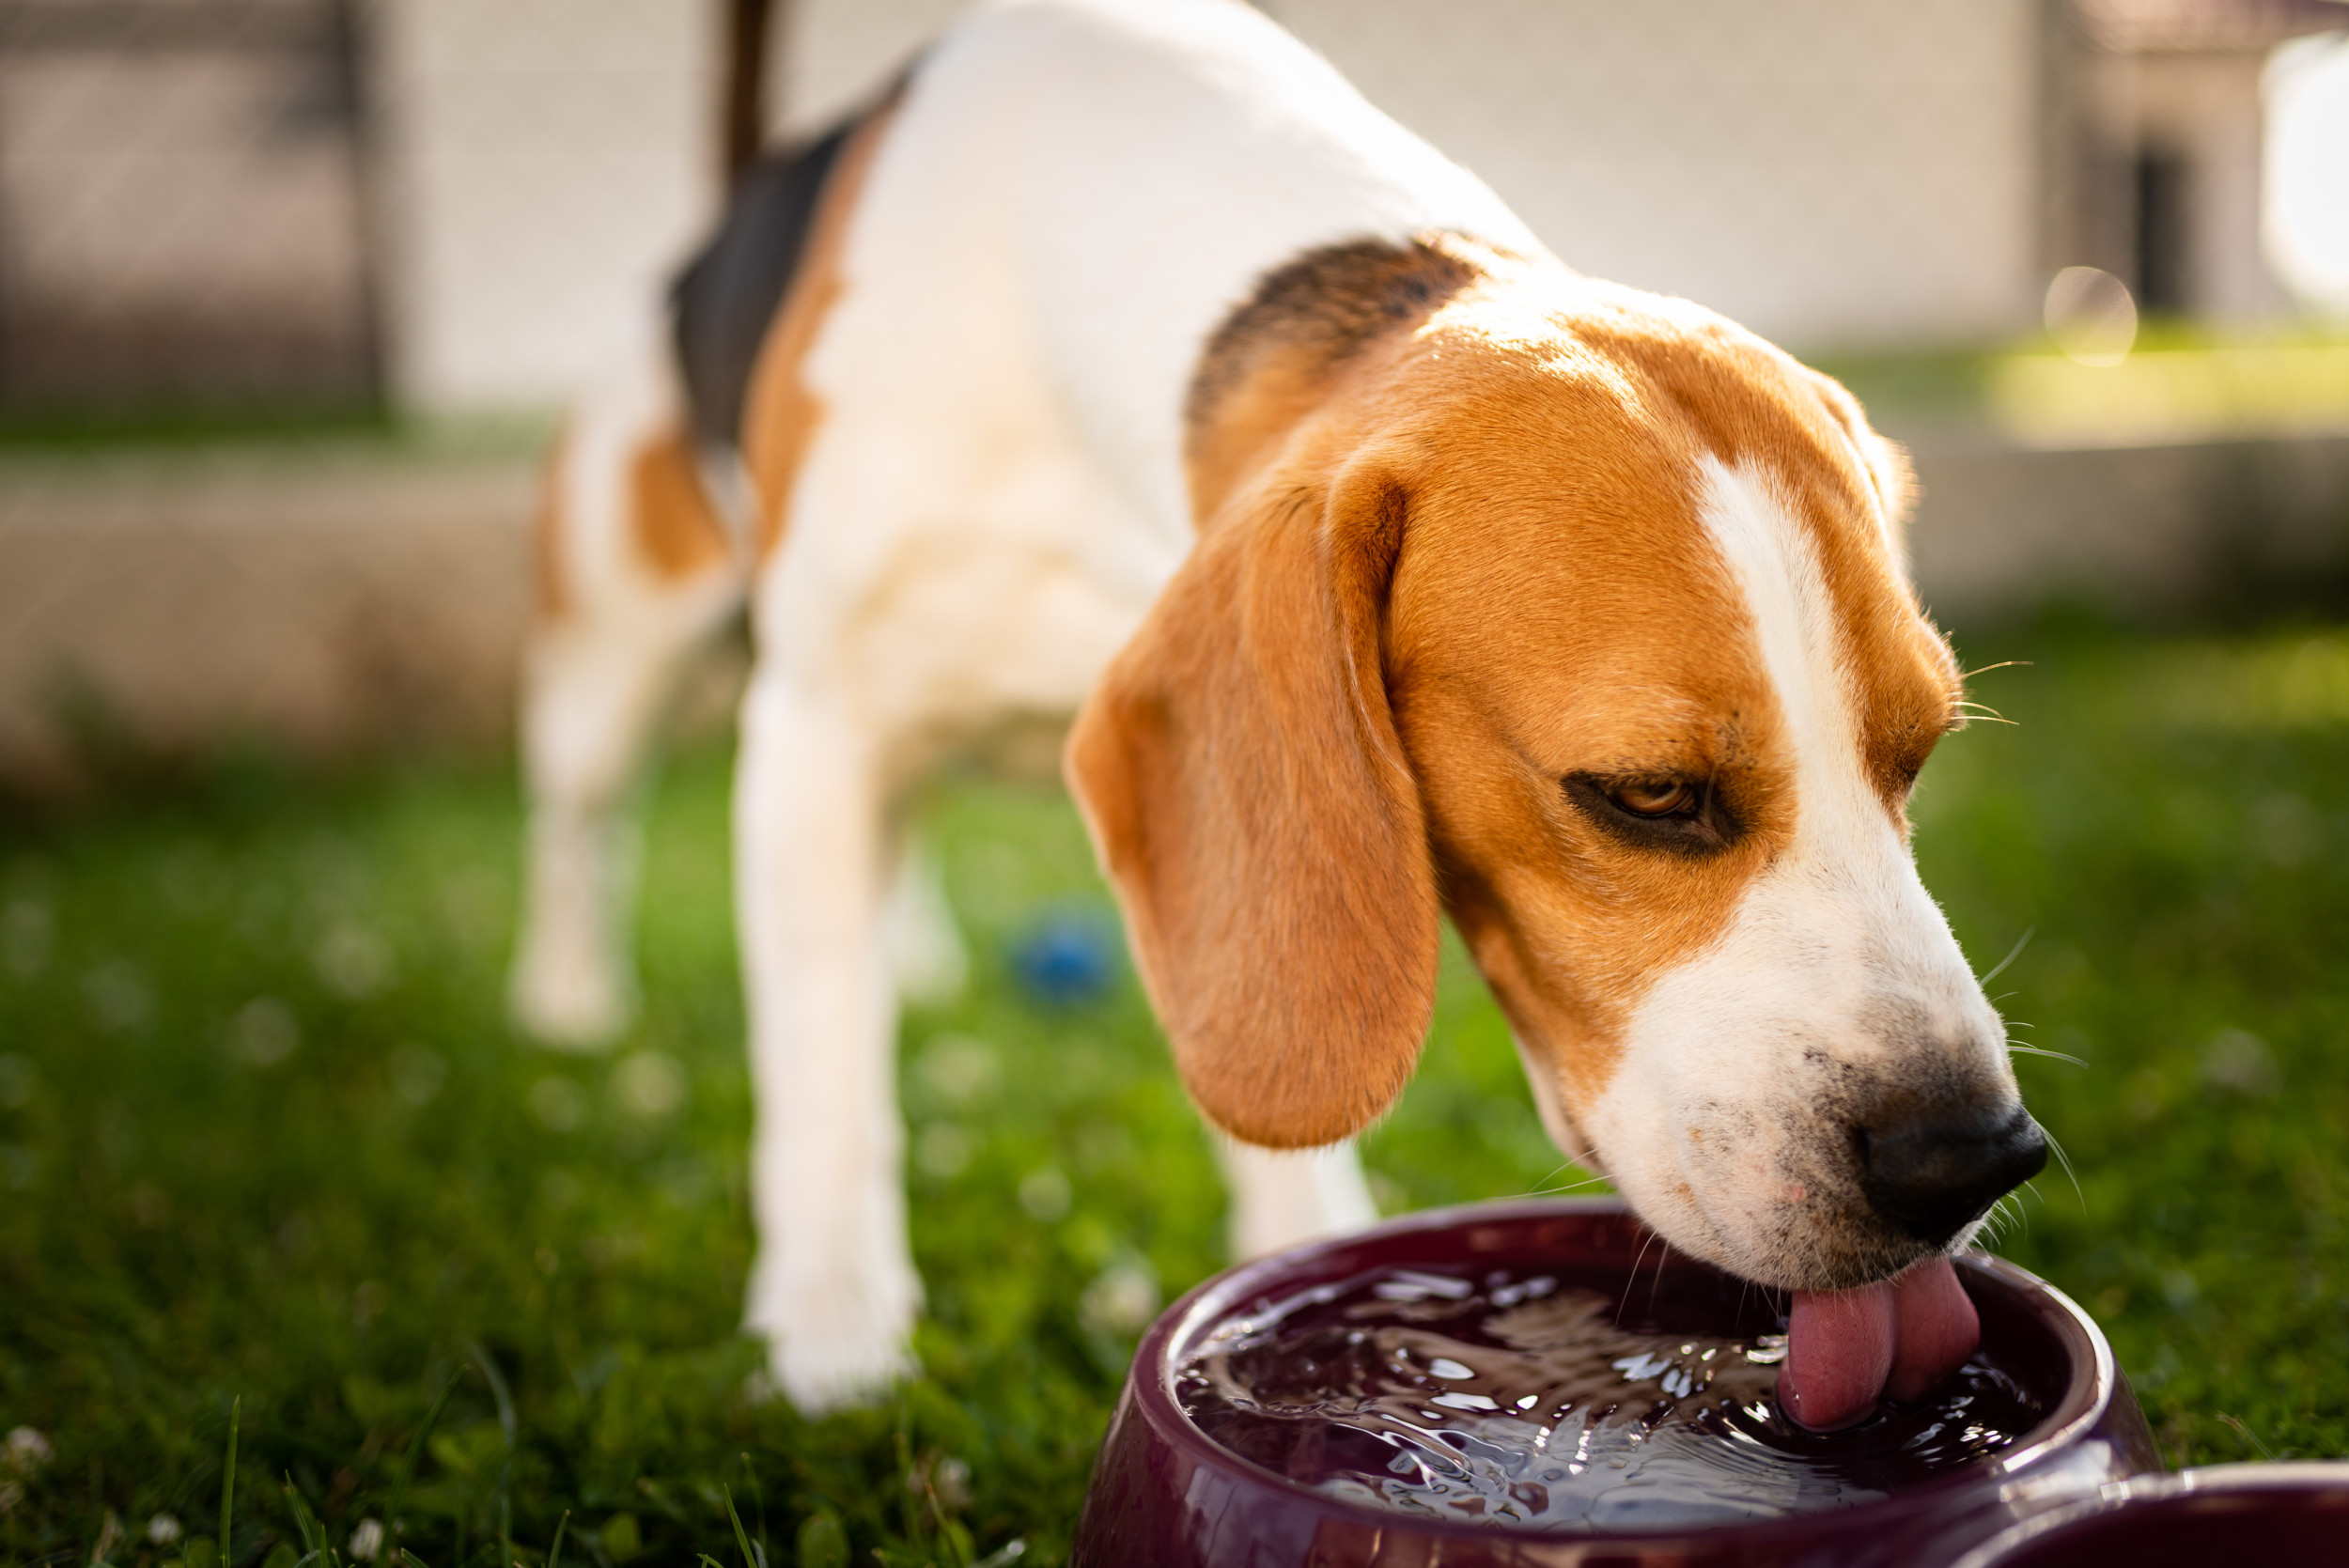 https://d.newsweek.com/en/full/2253929/beagle-drinking-water.jpg